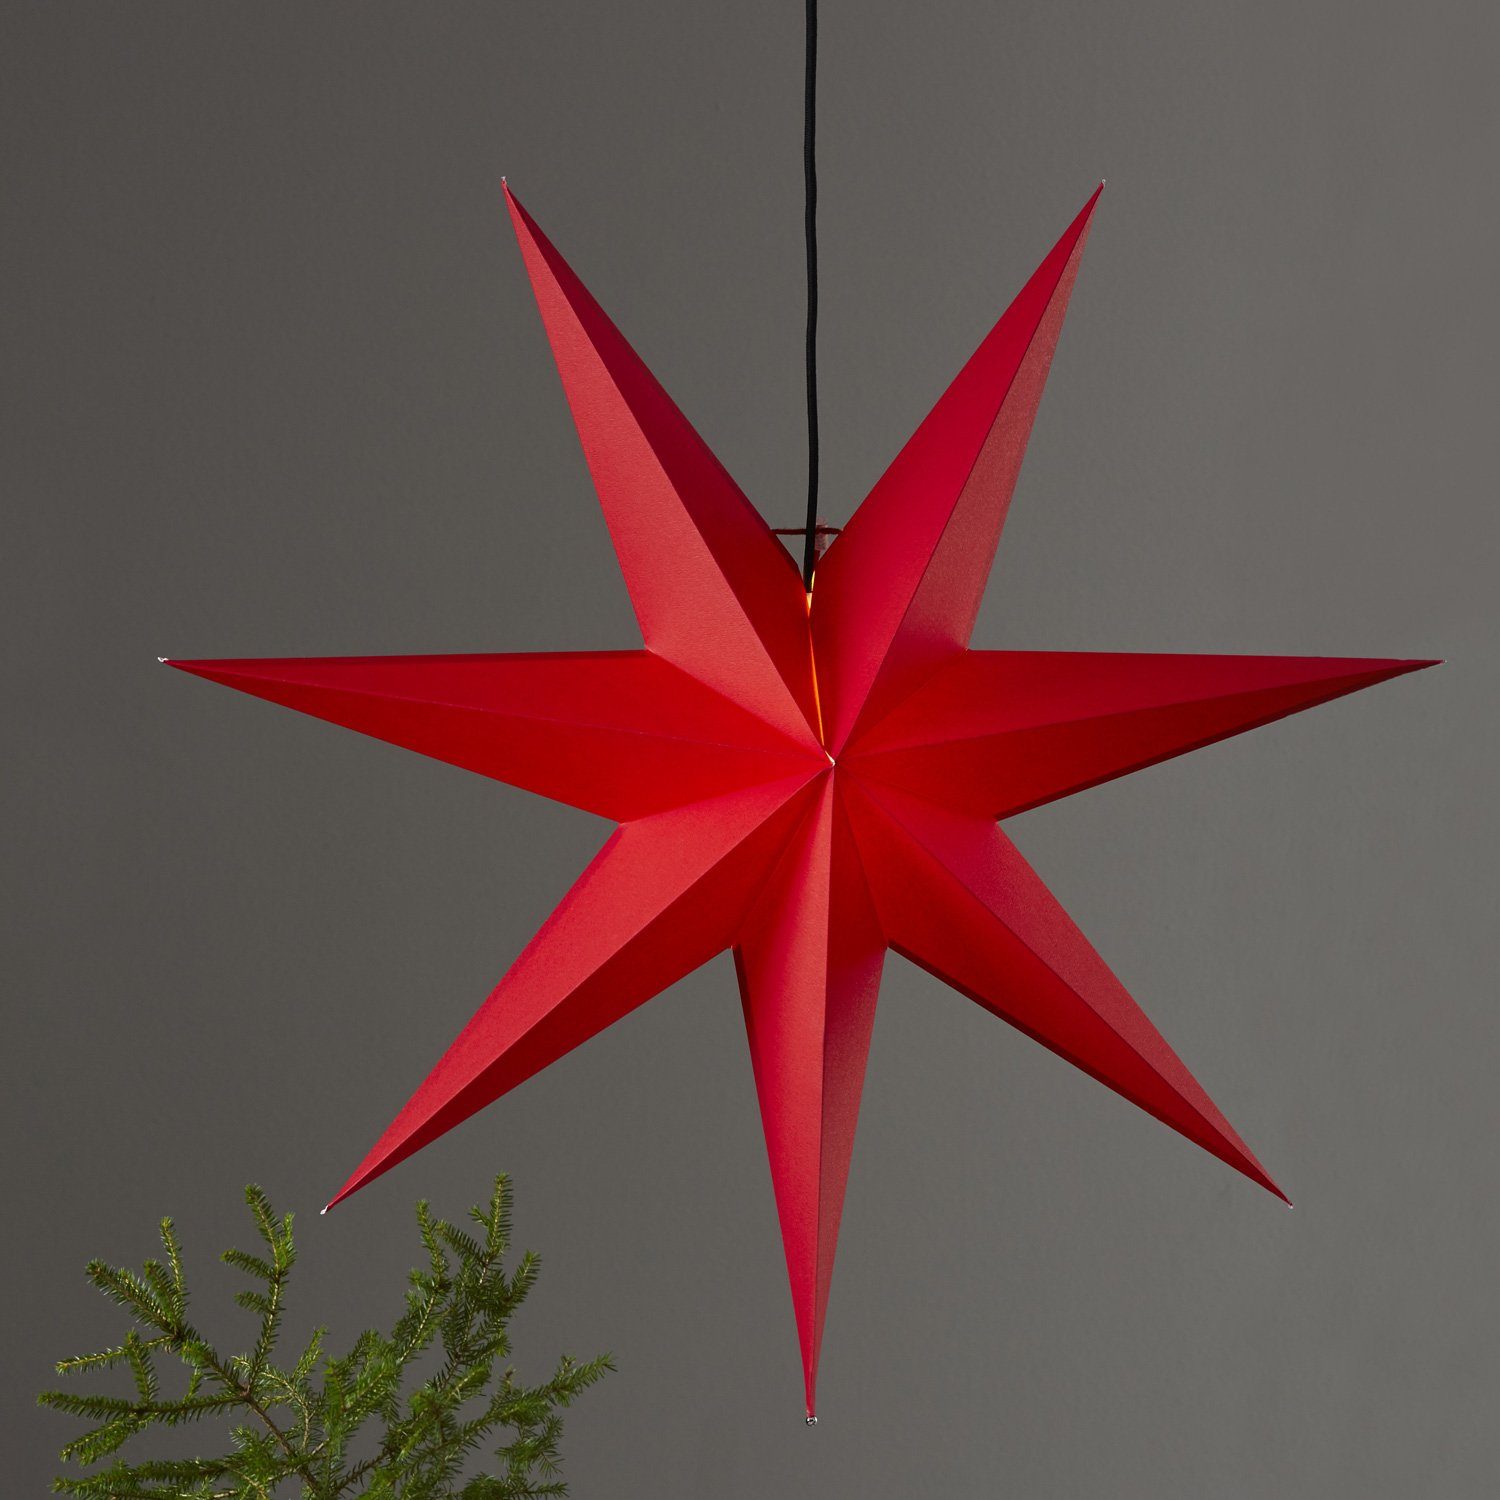 STAR TRADING LED Stern Papierstern Leuchtstern Faltstern 7-zackig hängend 70cm mit Kabel rot